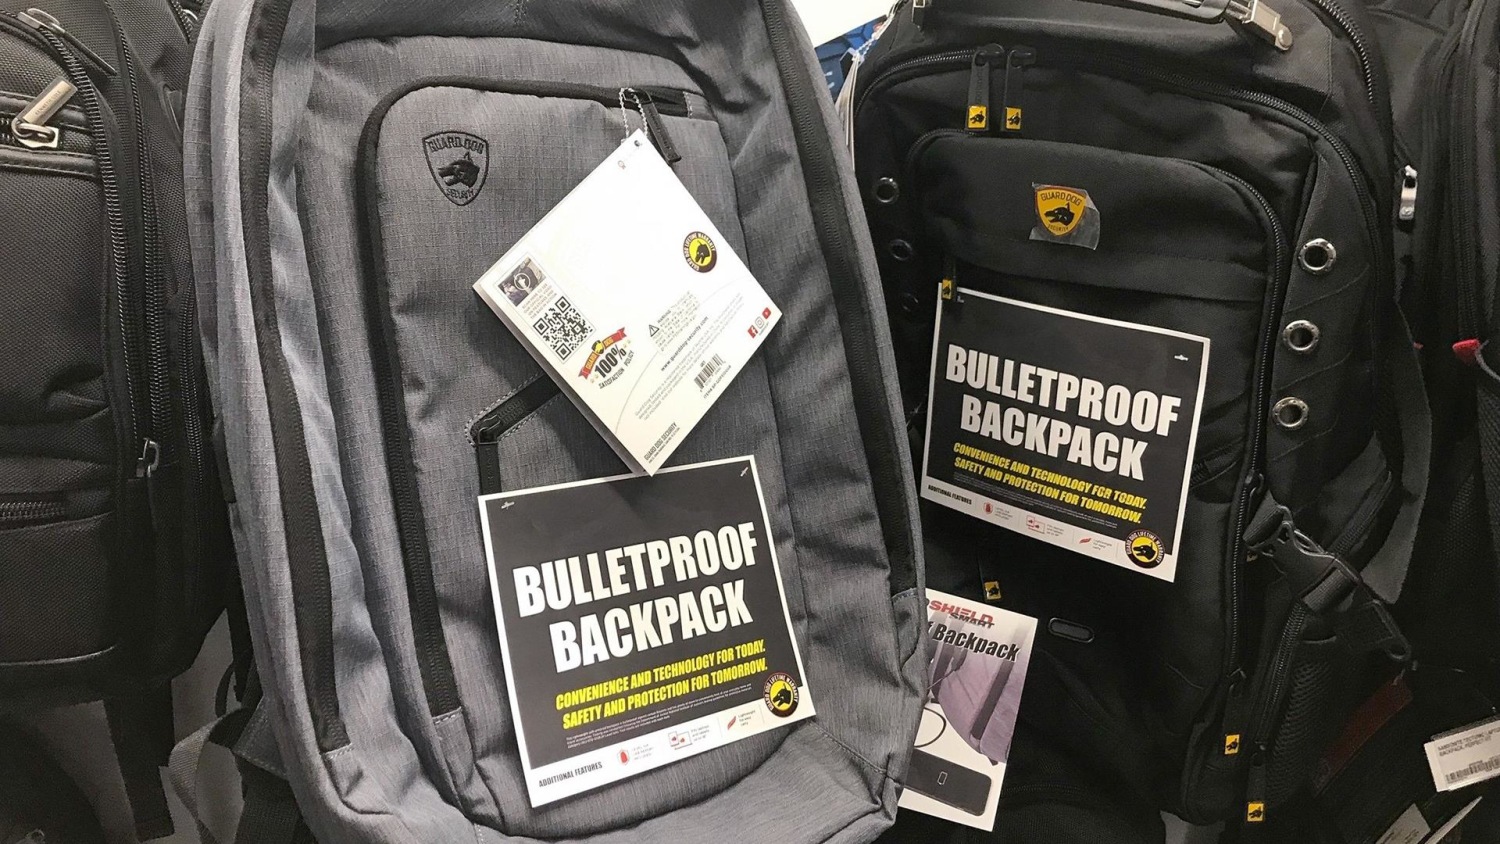 Bulletproof laptop bag can stop a .44 Magnum round